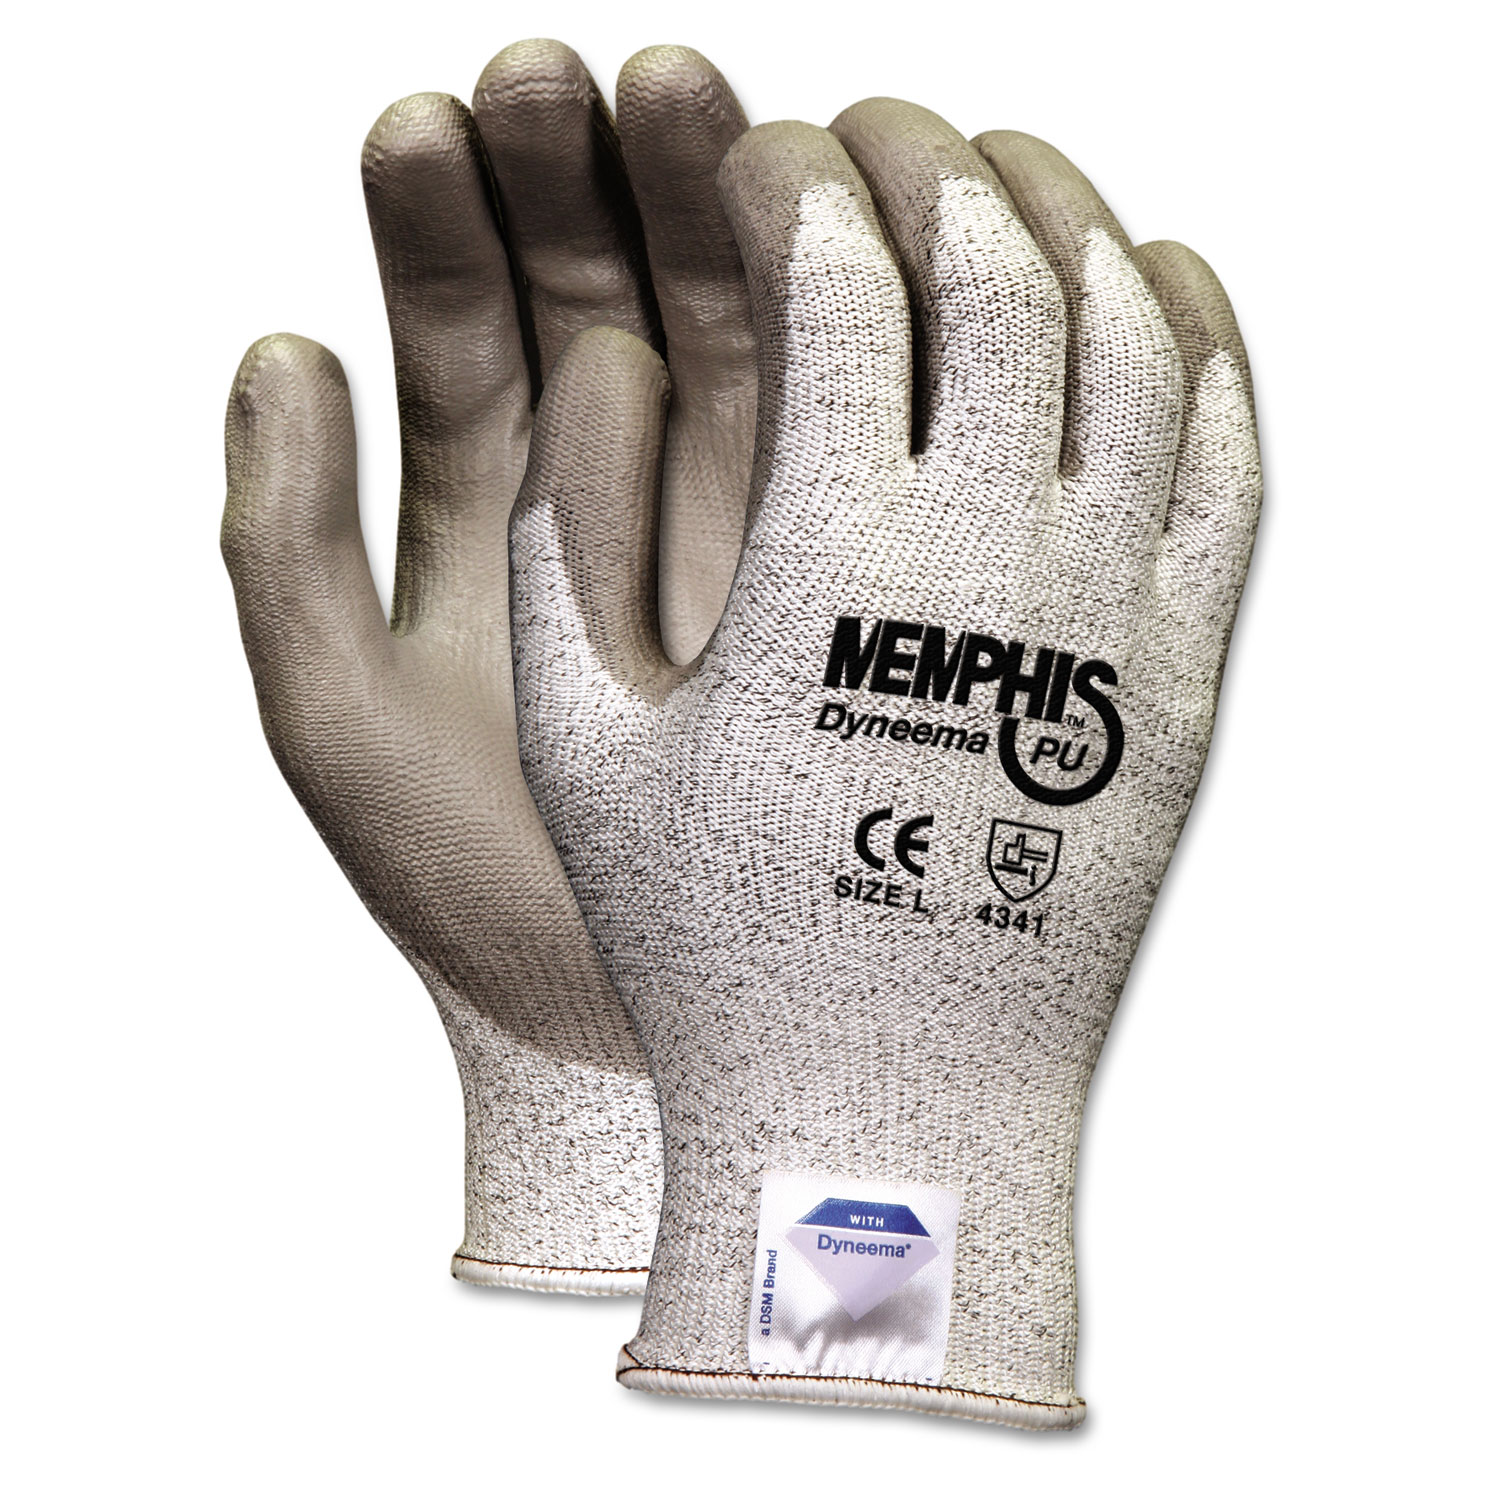  MCR Safety 9672M Memphis Dyneema Polyurethane Gloves, Medium, White/Gray, Pair (CRW9672M) 